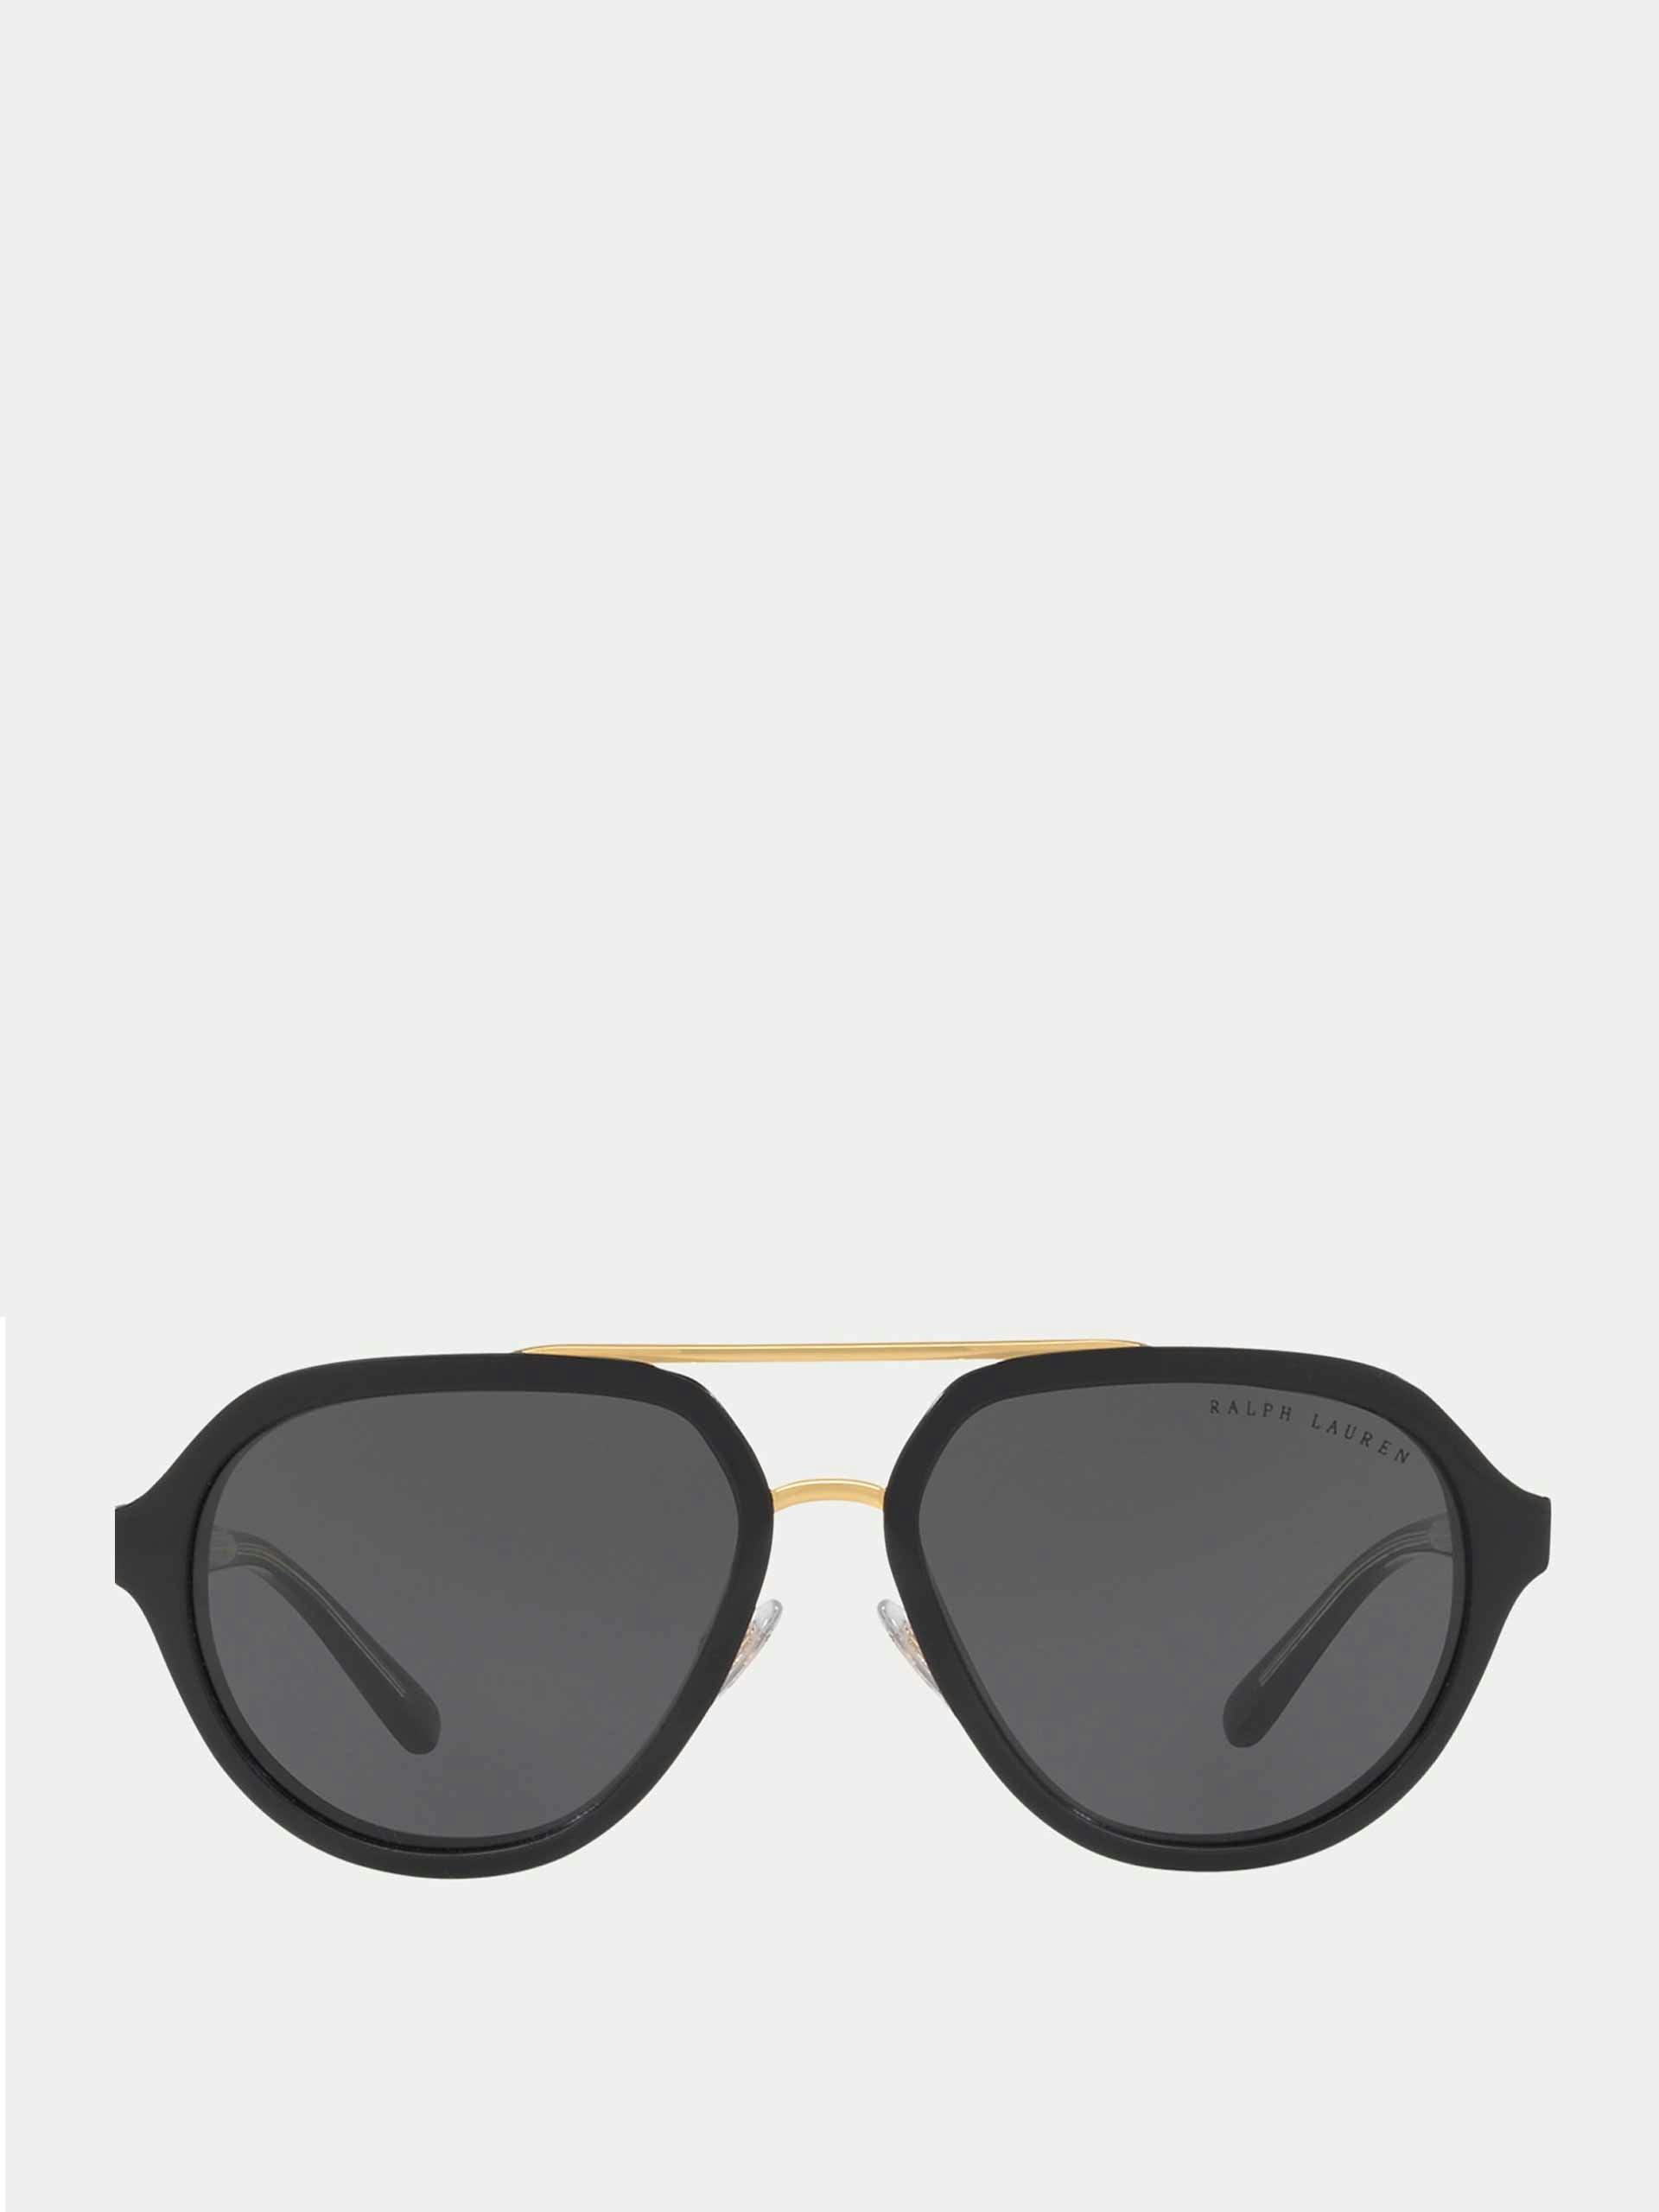 Modern pilot sunglasses